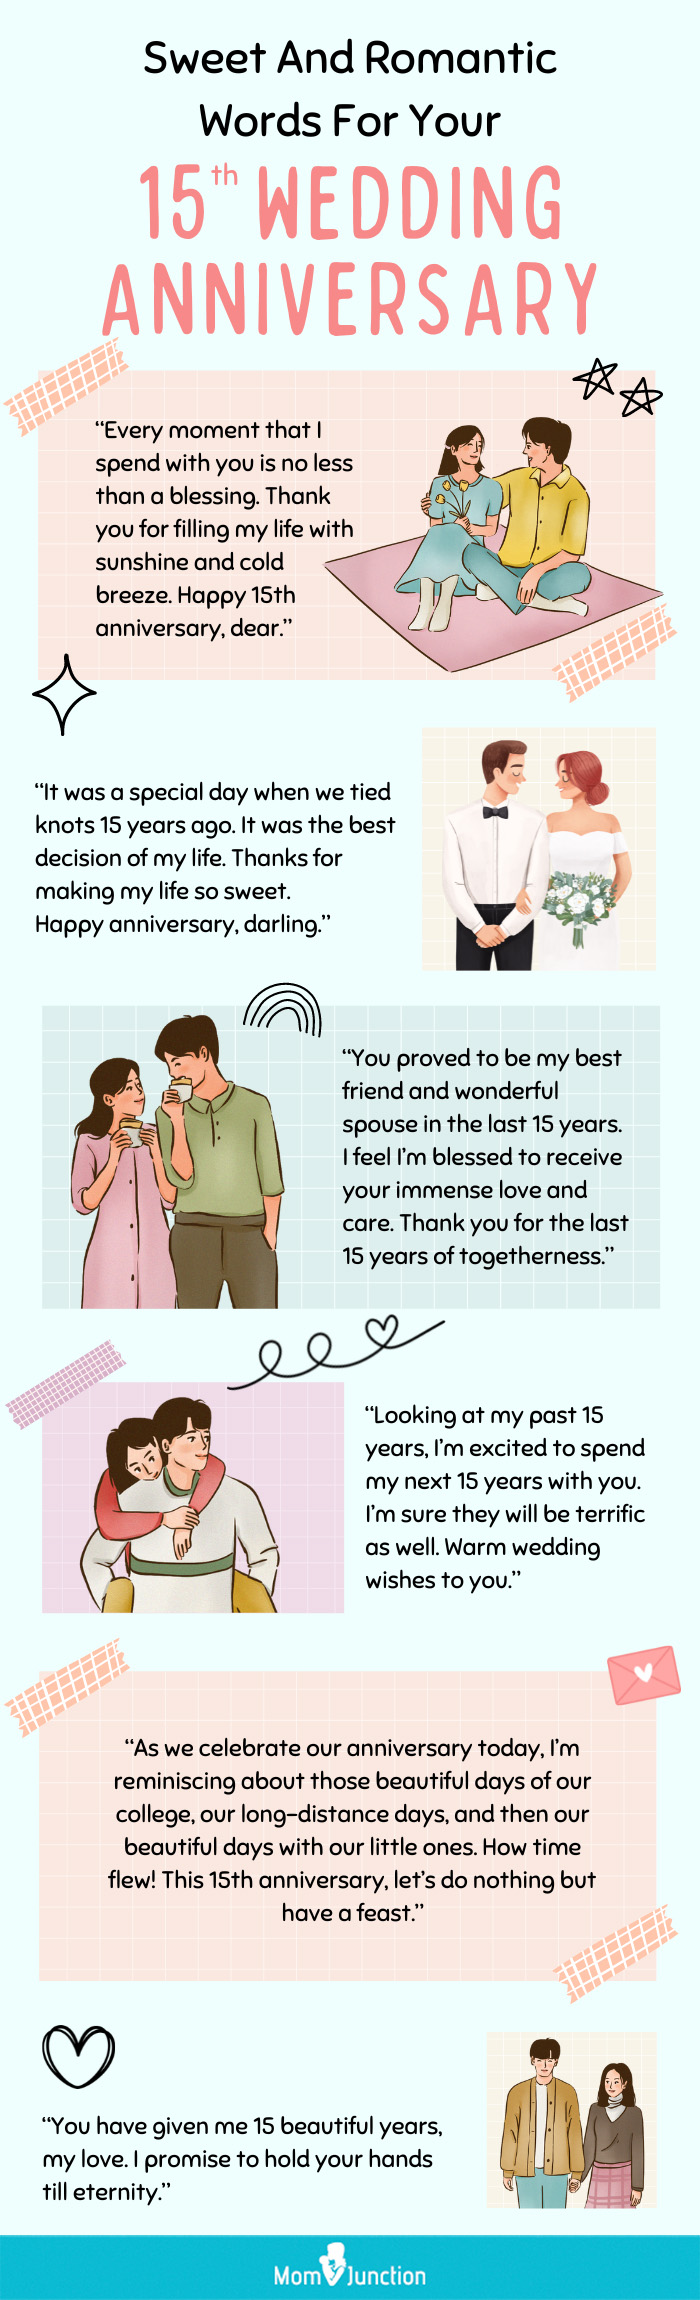 wedding anniversary wishes to couple : u/kaveeshblog